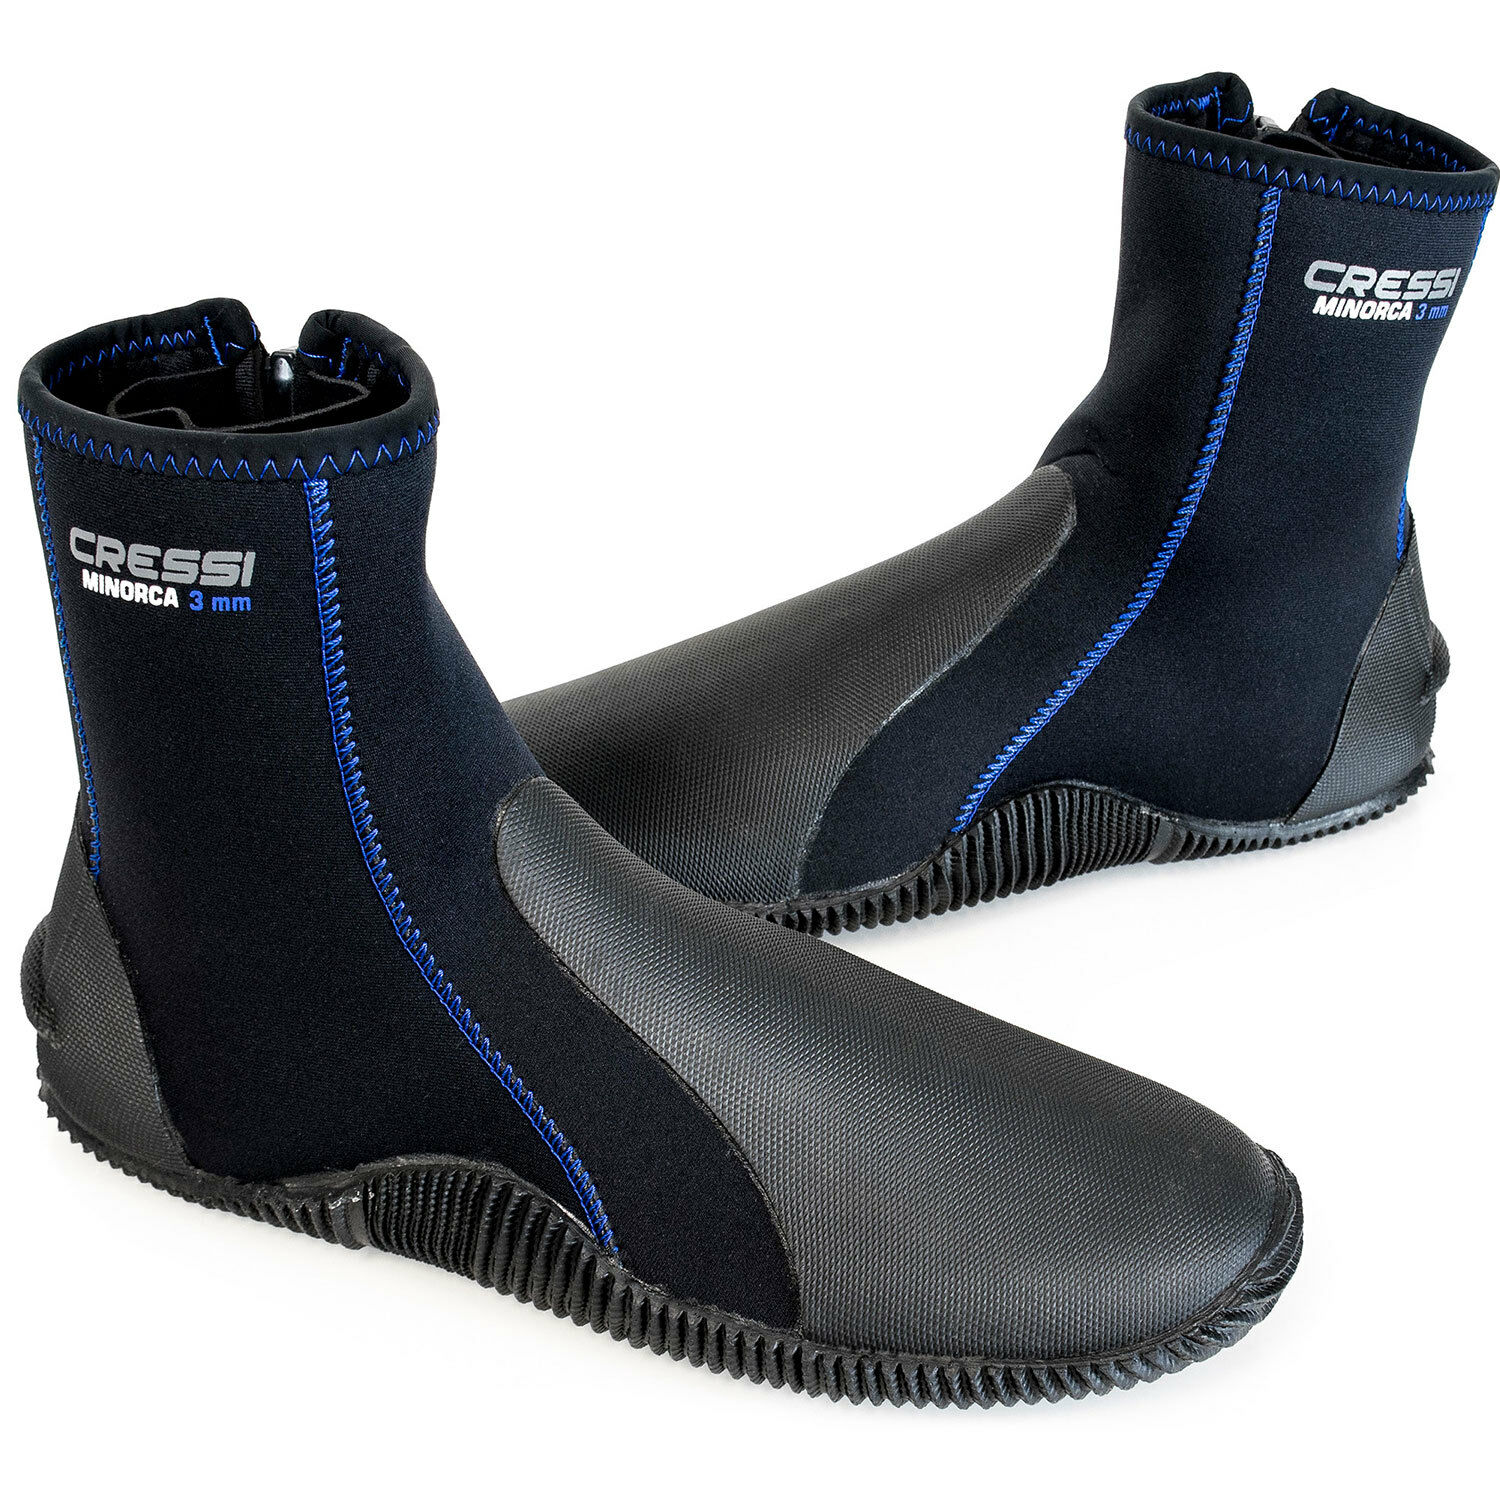 Cressi Minorca Tall 3mm Dive Boots Black / Blue